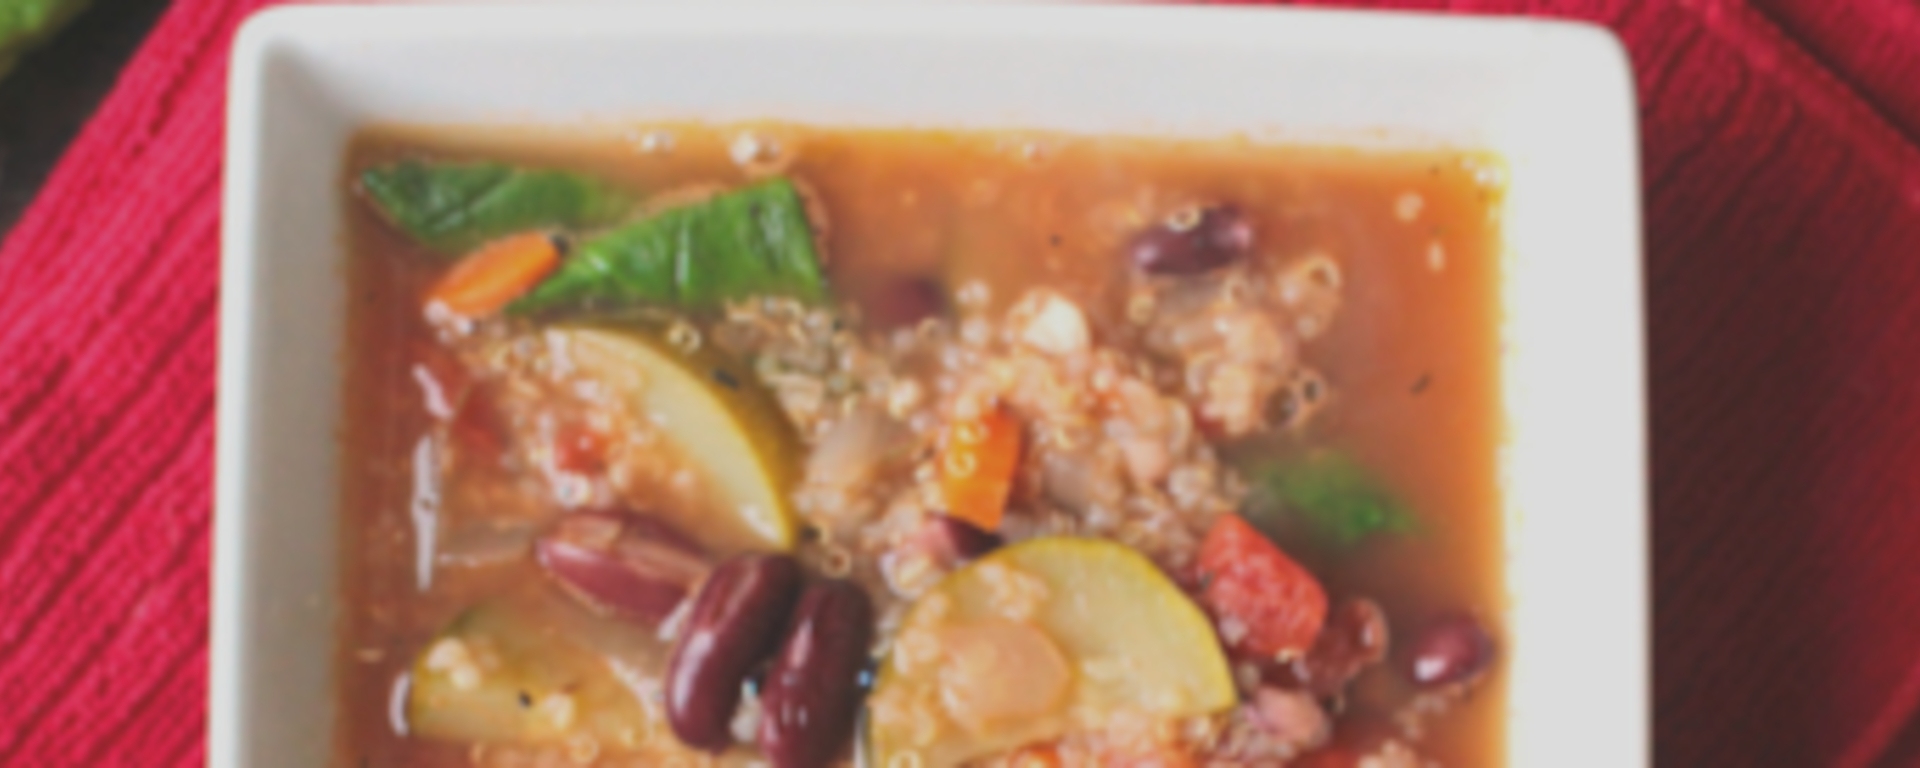 LuvMyRecipe.com - Quinoa Veggie Soup Featured